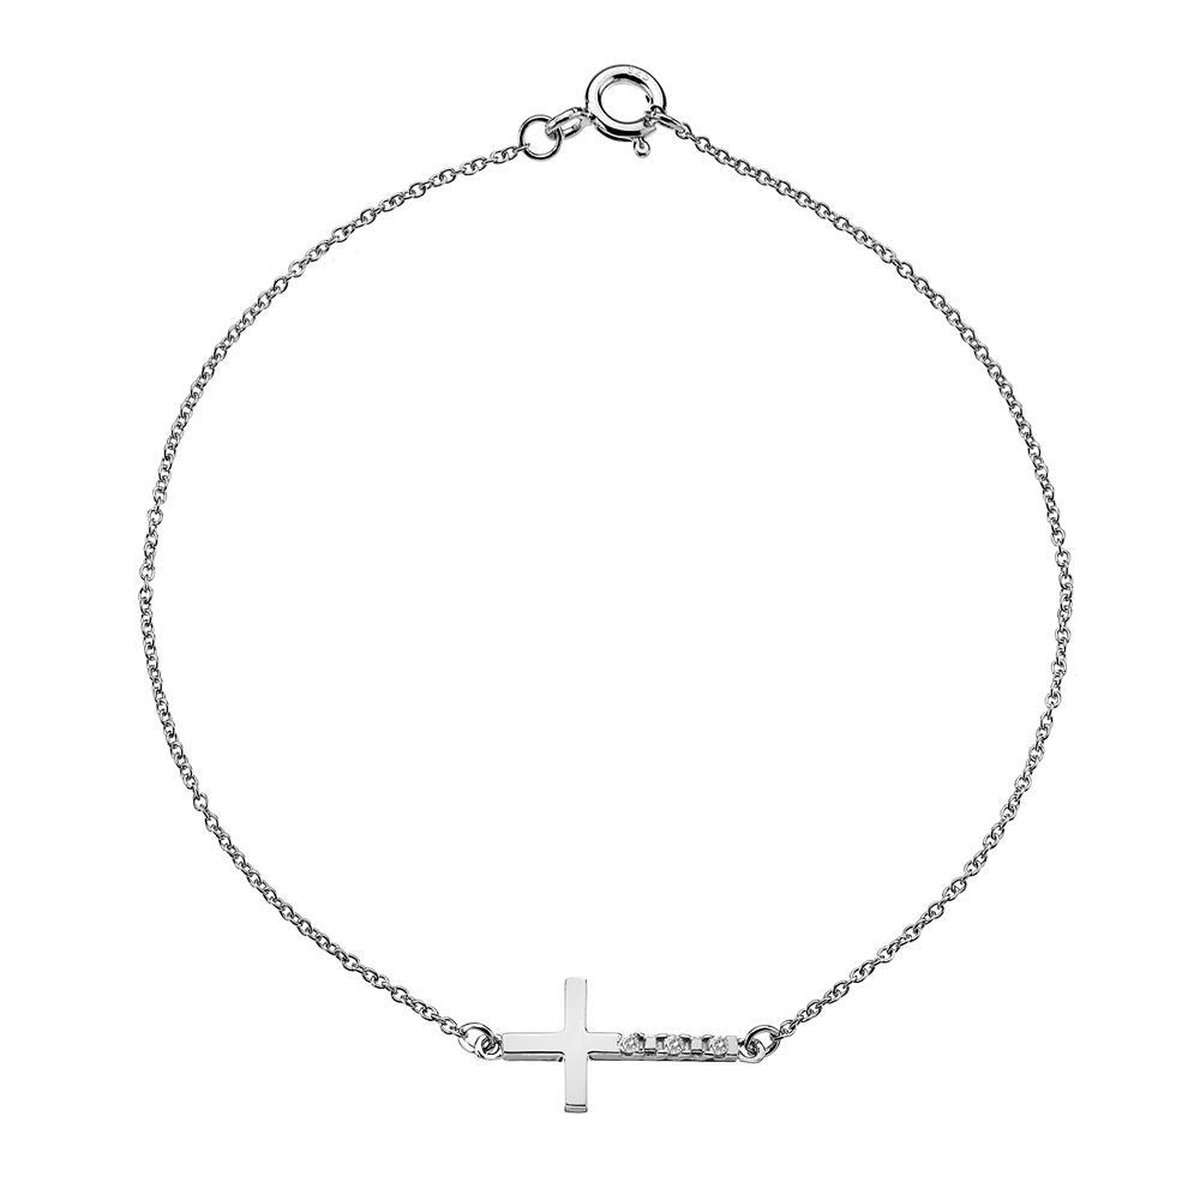 S.Sparkle Sideways Cross Bracelet